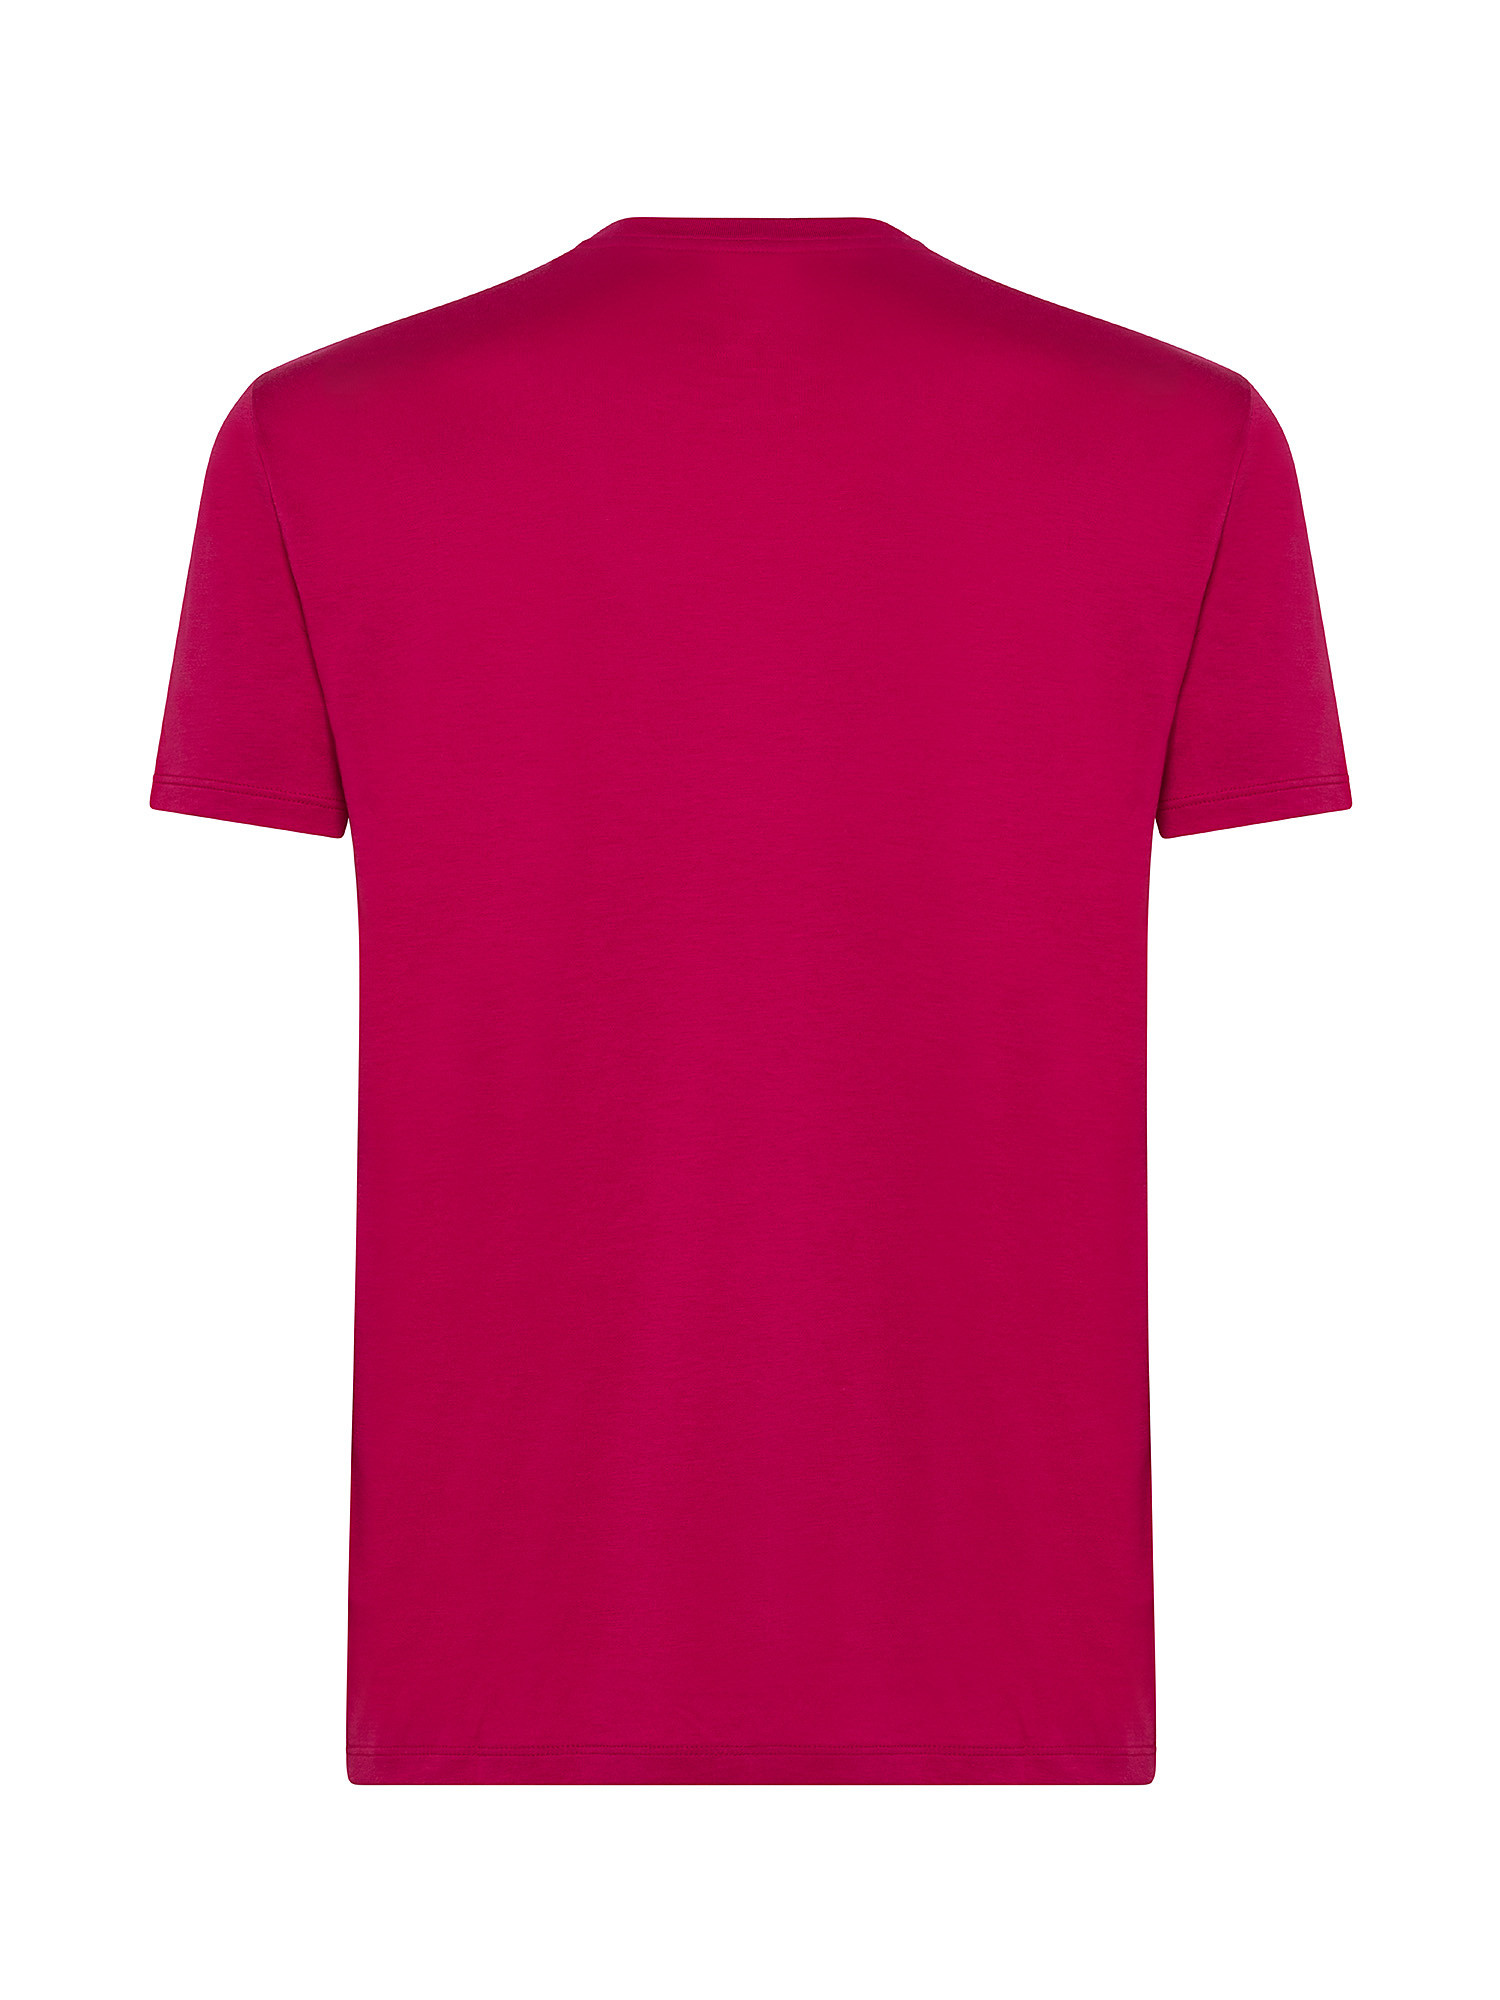 T-shirt, Pink Fuchsia, large image number 1